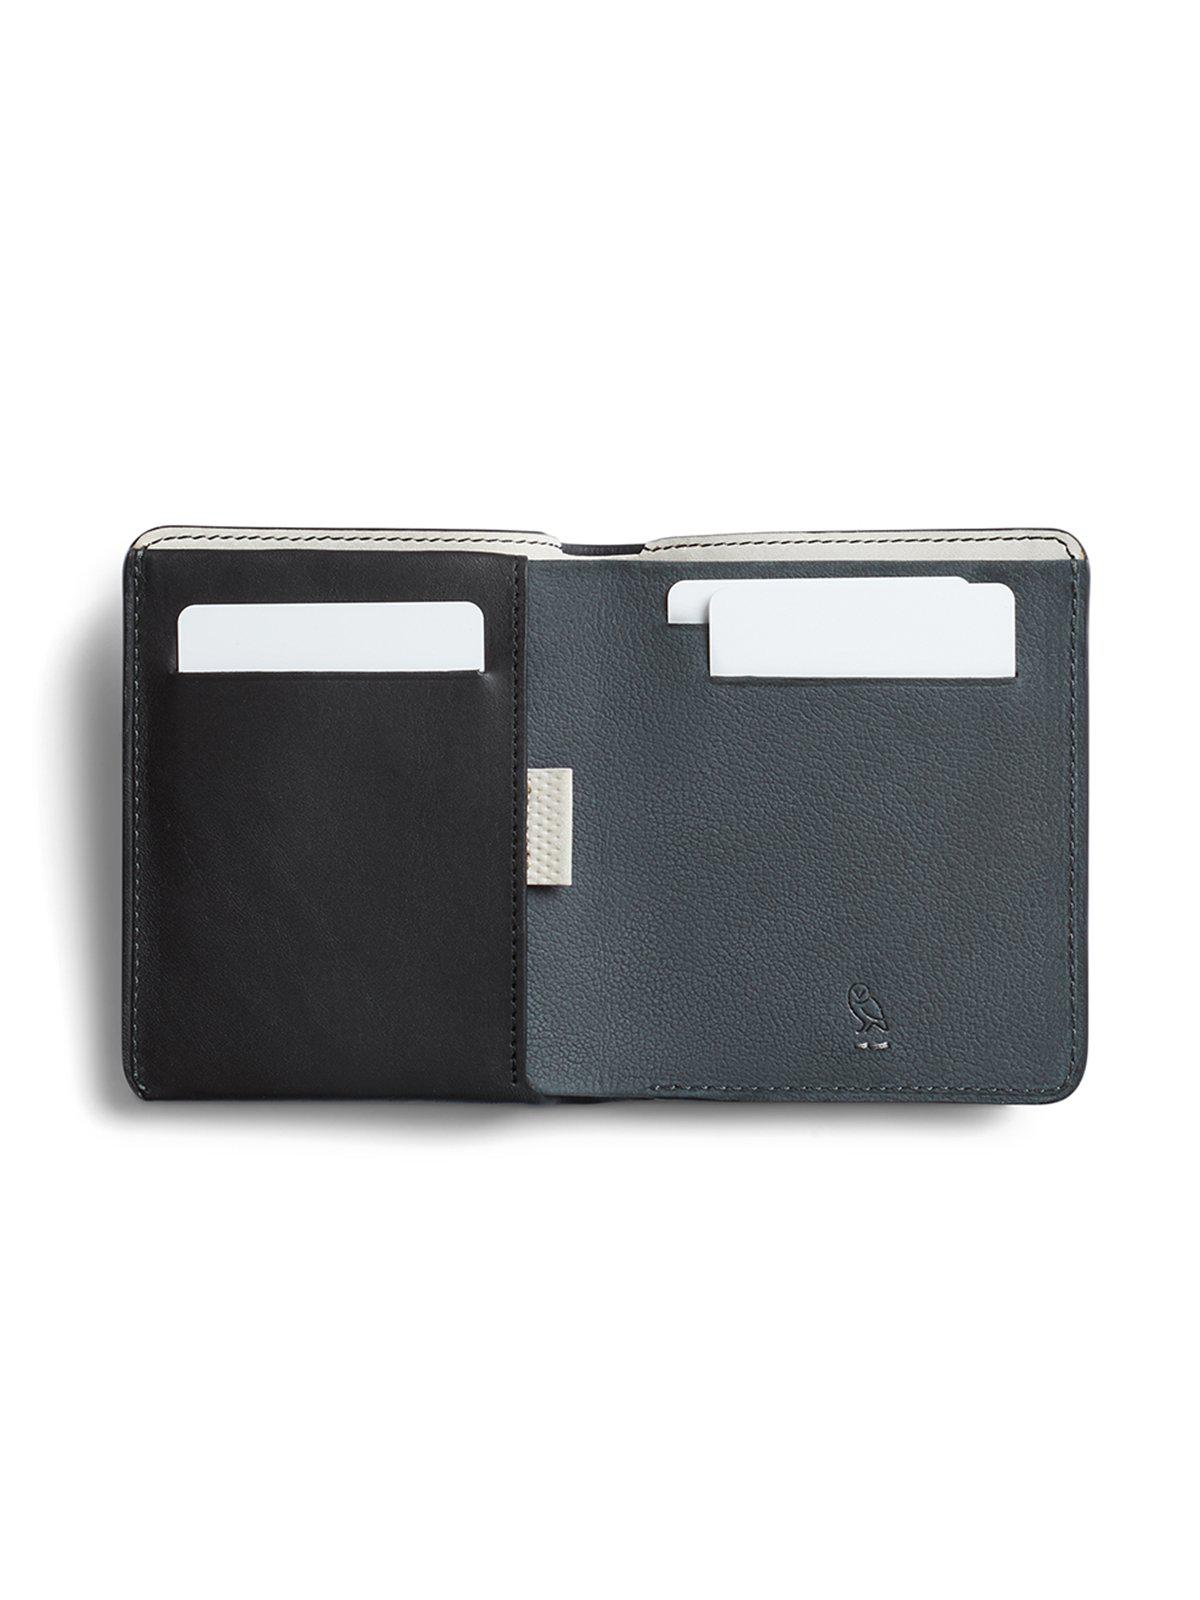 Bellroy Note Sleeve Wallet Premium Edition Black RFID